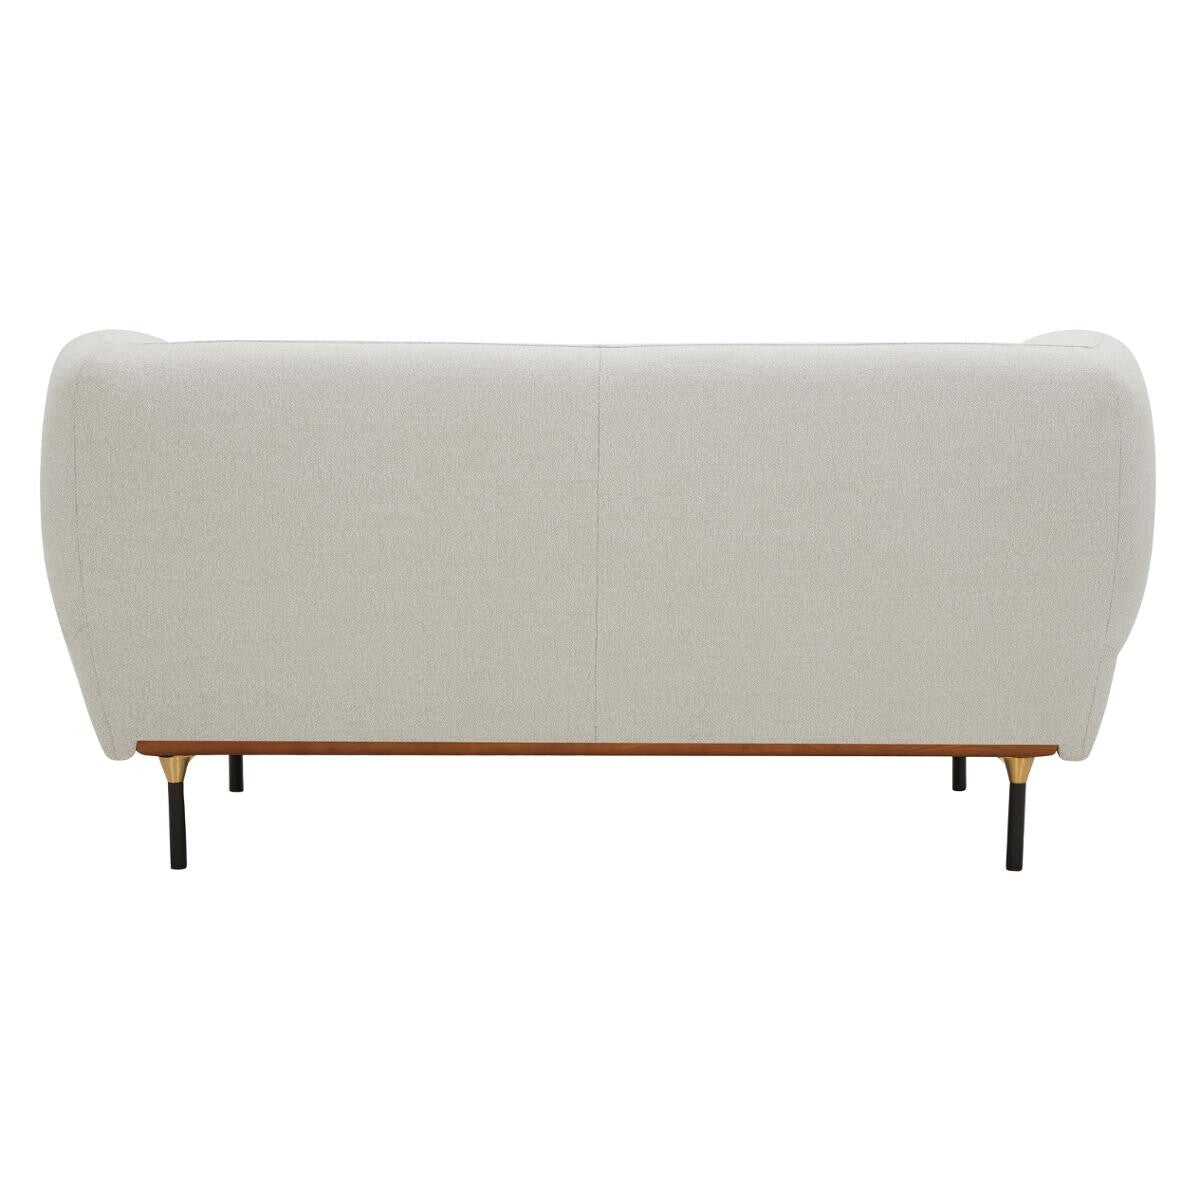 BEAU Daphne fabric sofa - 2-seater - L172xD97xH80cm - Pearl gray